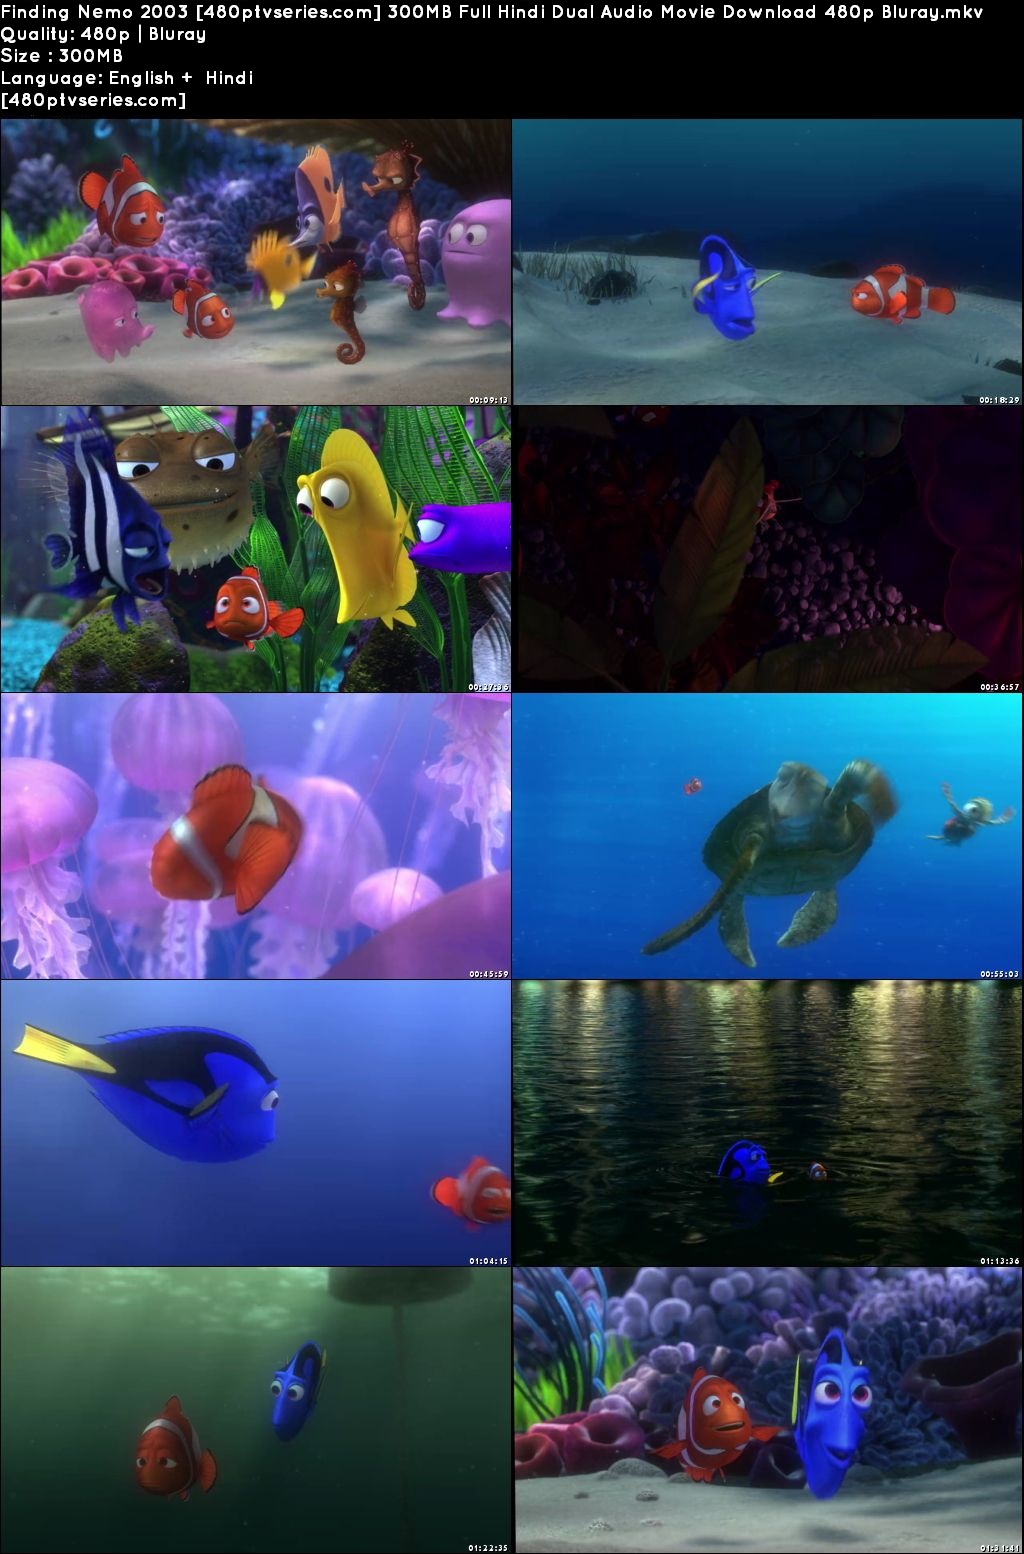 Finding Nemo 2003 300MB Full Hindi Dual Audio Movie Download 480p Bluray